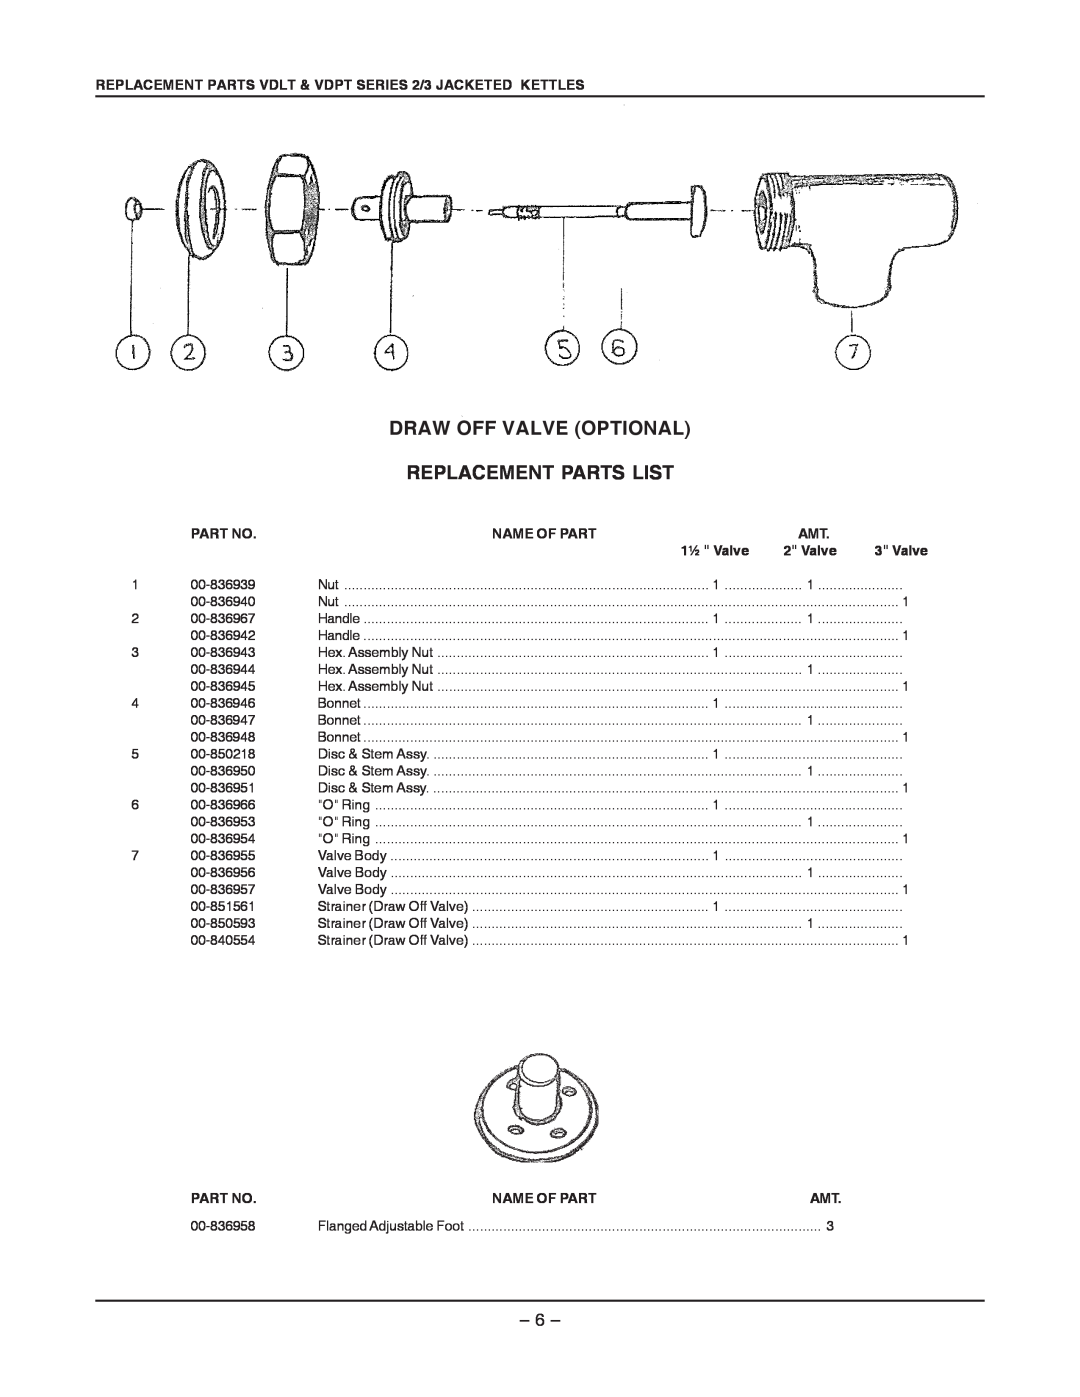 Vulcan-Hart VDLT30, ML-103416, ML-103418, ML-103417, ML-103414, VDLT80, VDLT60 Draw Off Valve Optional Replacement Parts List 